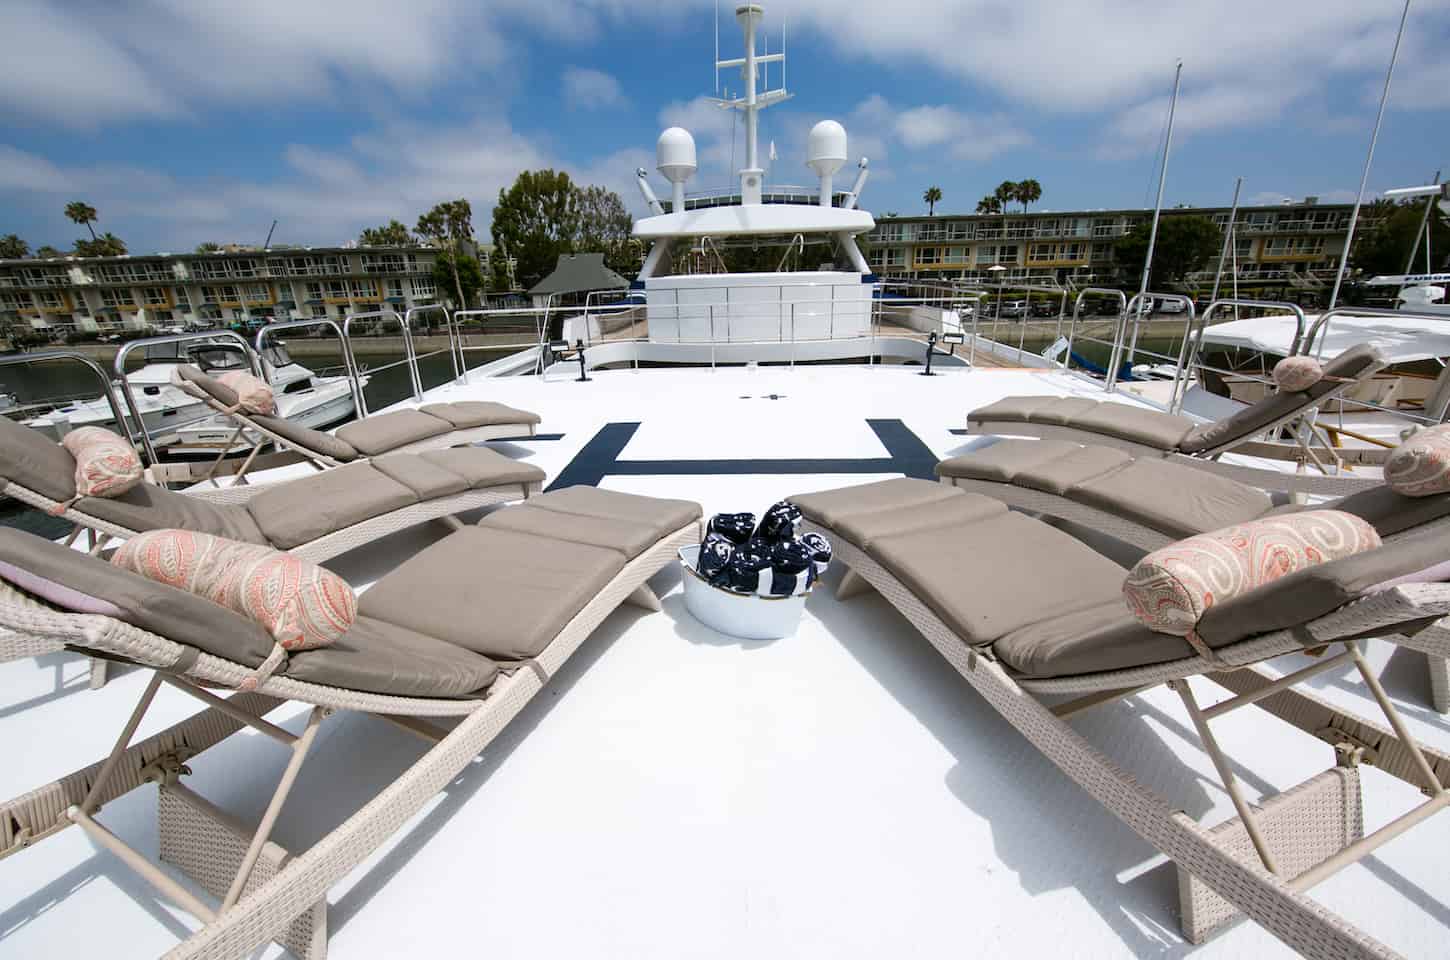 Leight Star Yacht - Overnight - Boat Rental Near Me